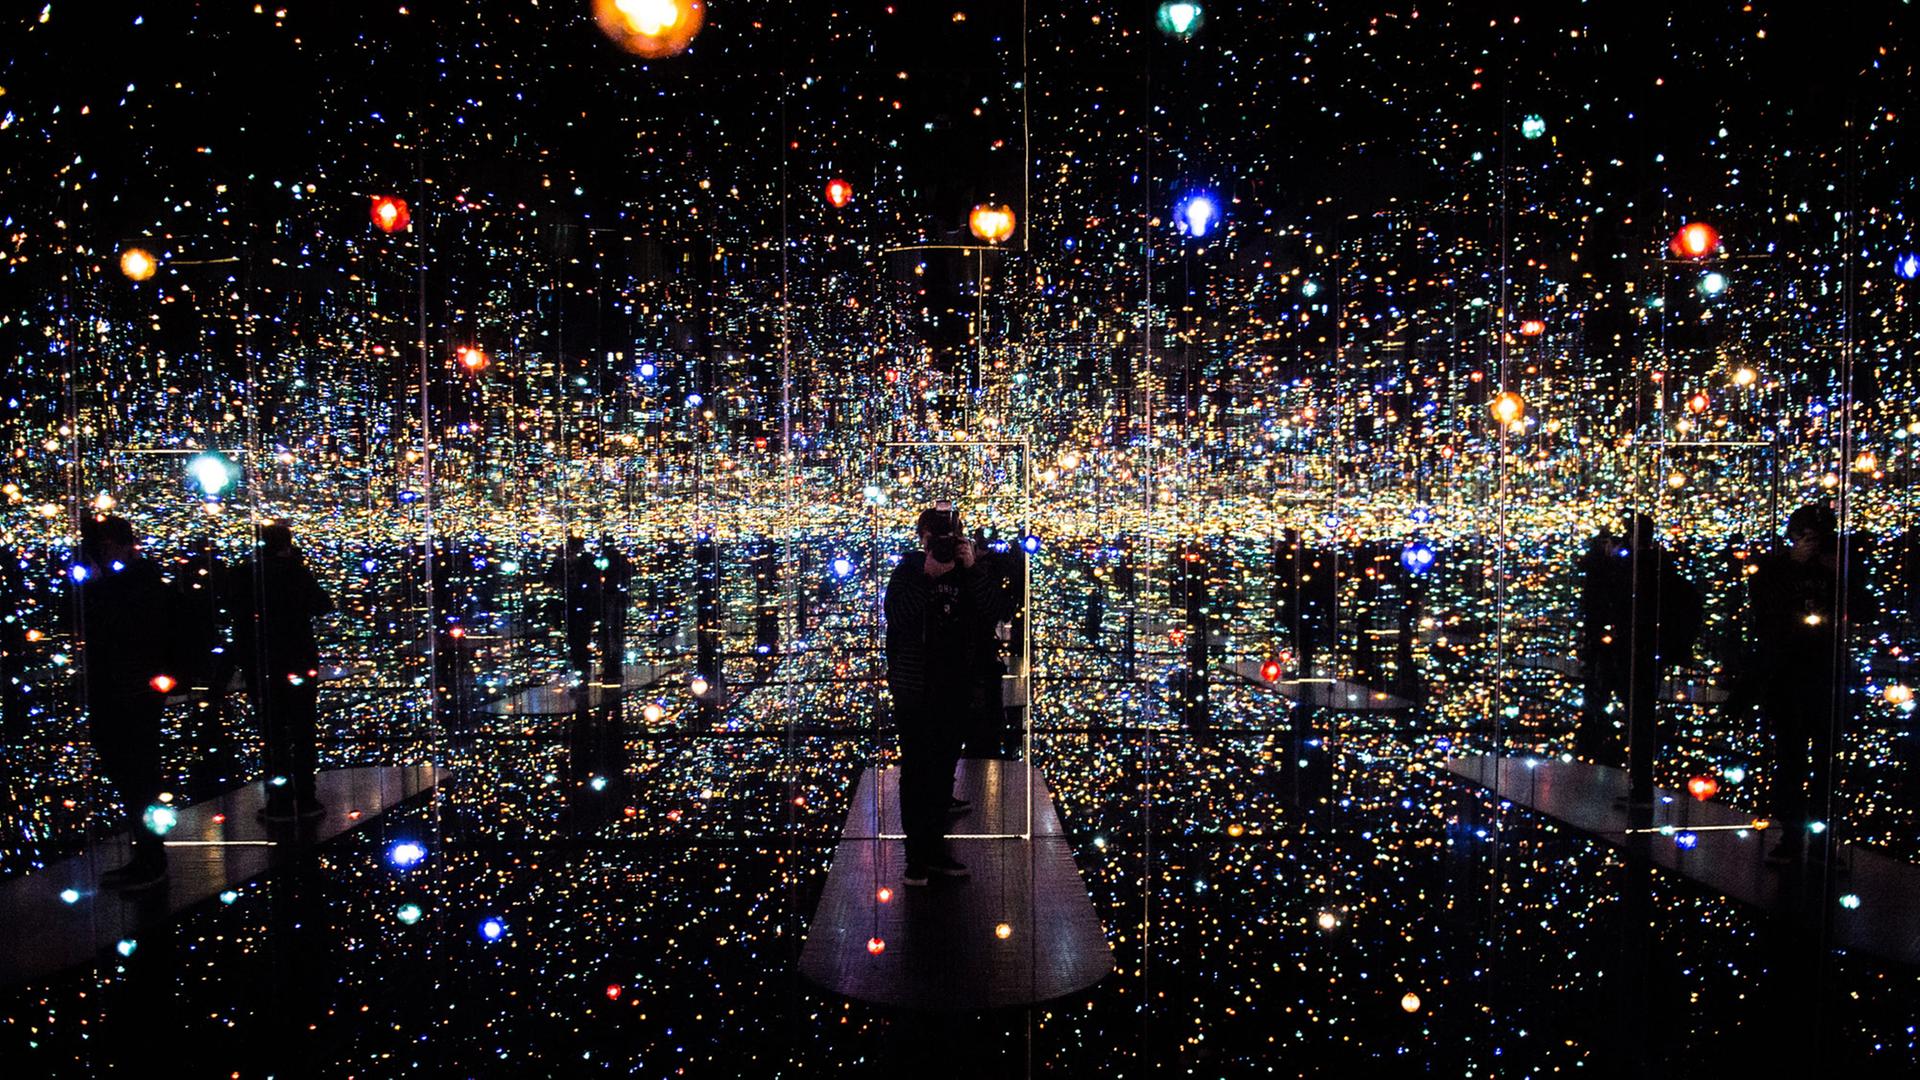 Die Kunstinstallation "Infinity Mirrored Room - The Souls of Millions of Light Years Away, 2013" in der Ausstellung "Never Ending Stories" im Kunstmuseum in Wolfsburg